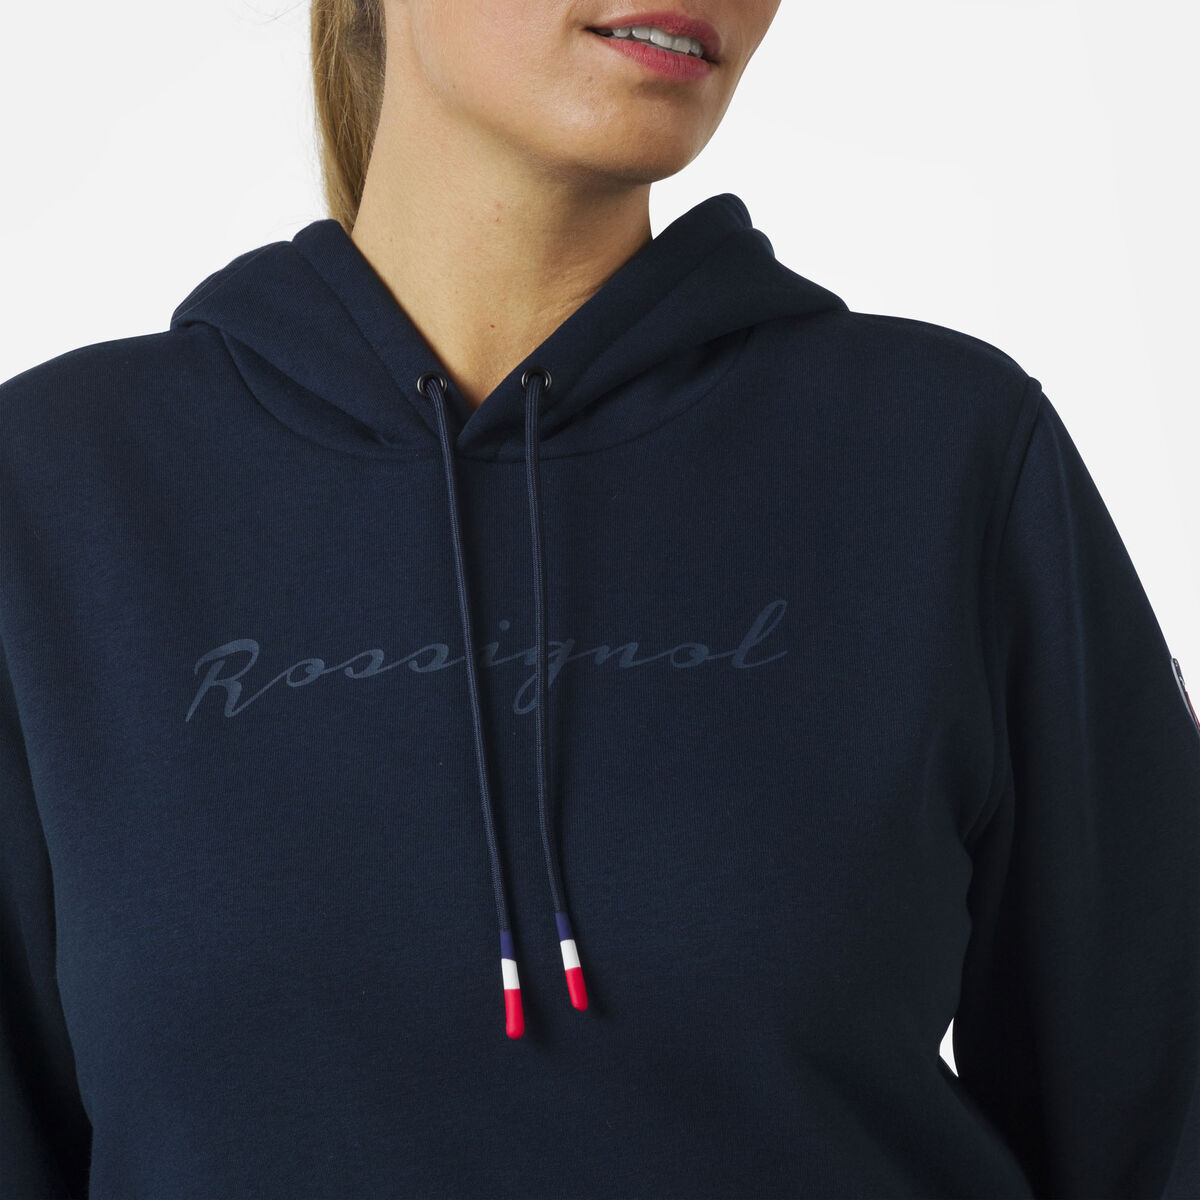 Rossignol Women's hooded logo cotton sweatshirt blue